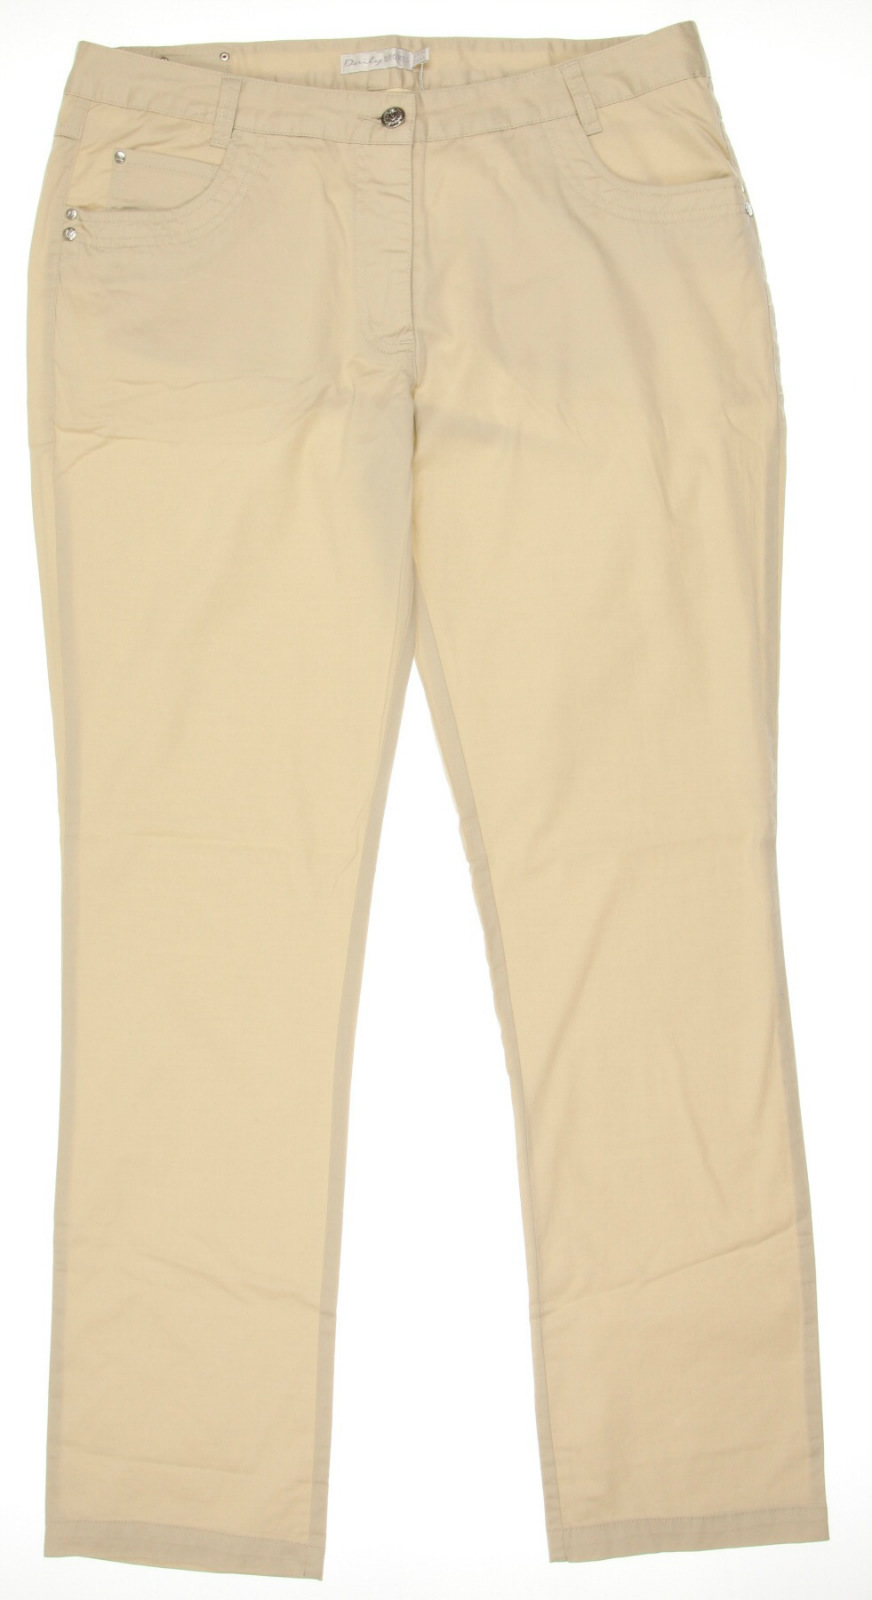 New Women's Daily Sport Ultimate Pro Stretch Basic Golf Pants Size 14 ...